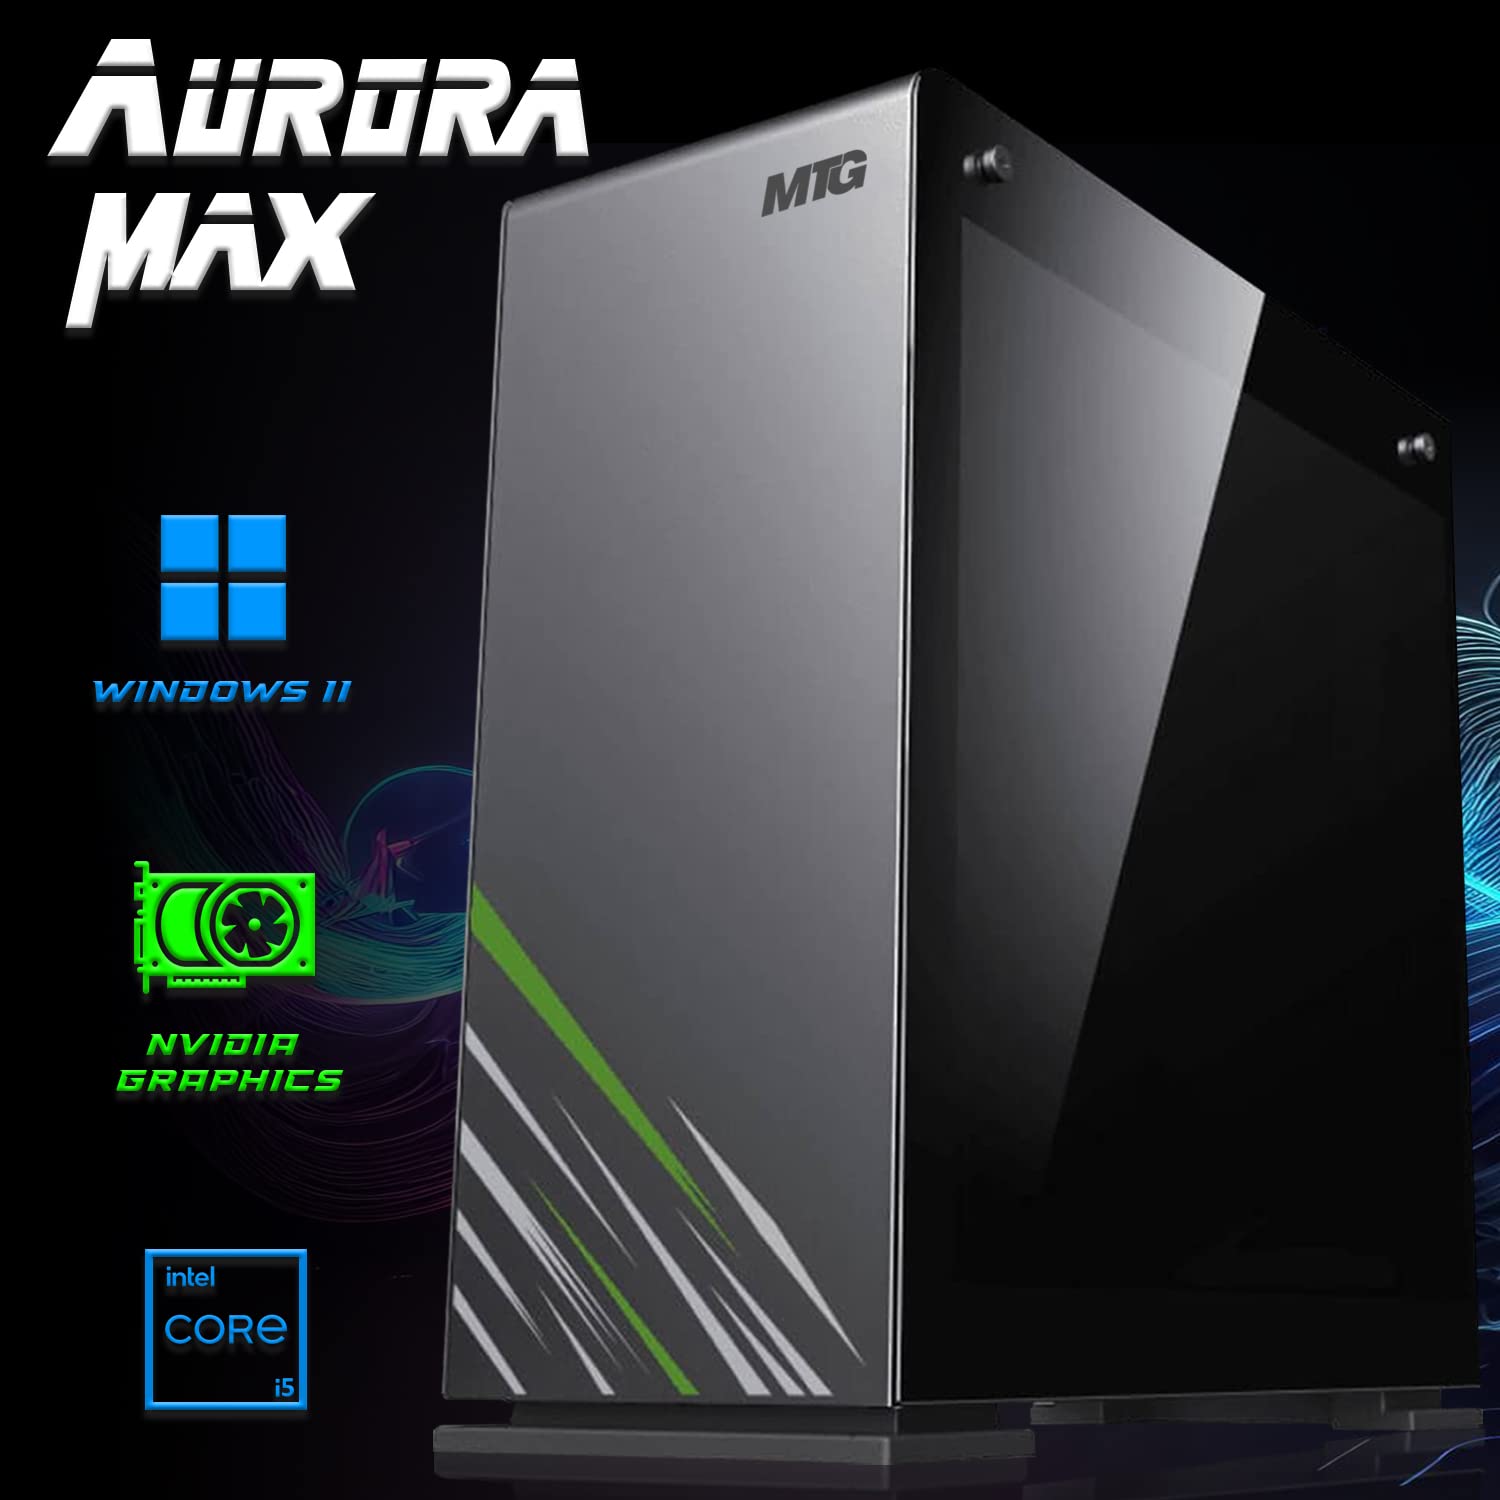 Aurora Max Gaming Tower PC- Intel i5 12th Gen, GTX 1660S 6GB 192bits, 32GB RGB Ram, 512GB Nvme, 2TB HDD, 27 Inch 165HZ Monitor, RGB Keyboard Mouse, Speaker, Liquid Cooling, Webcam, Win 11